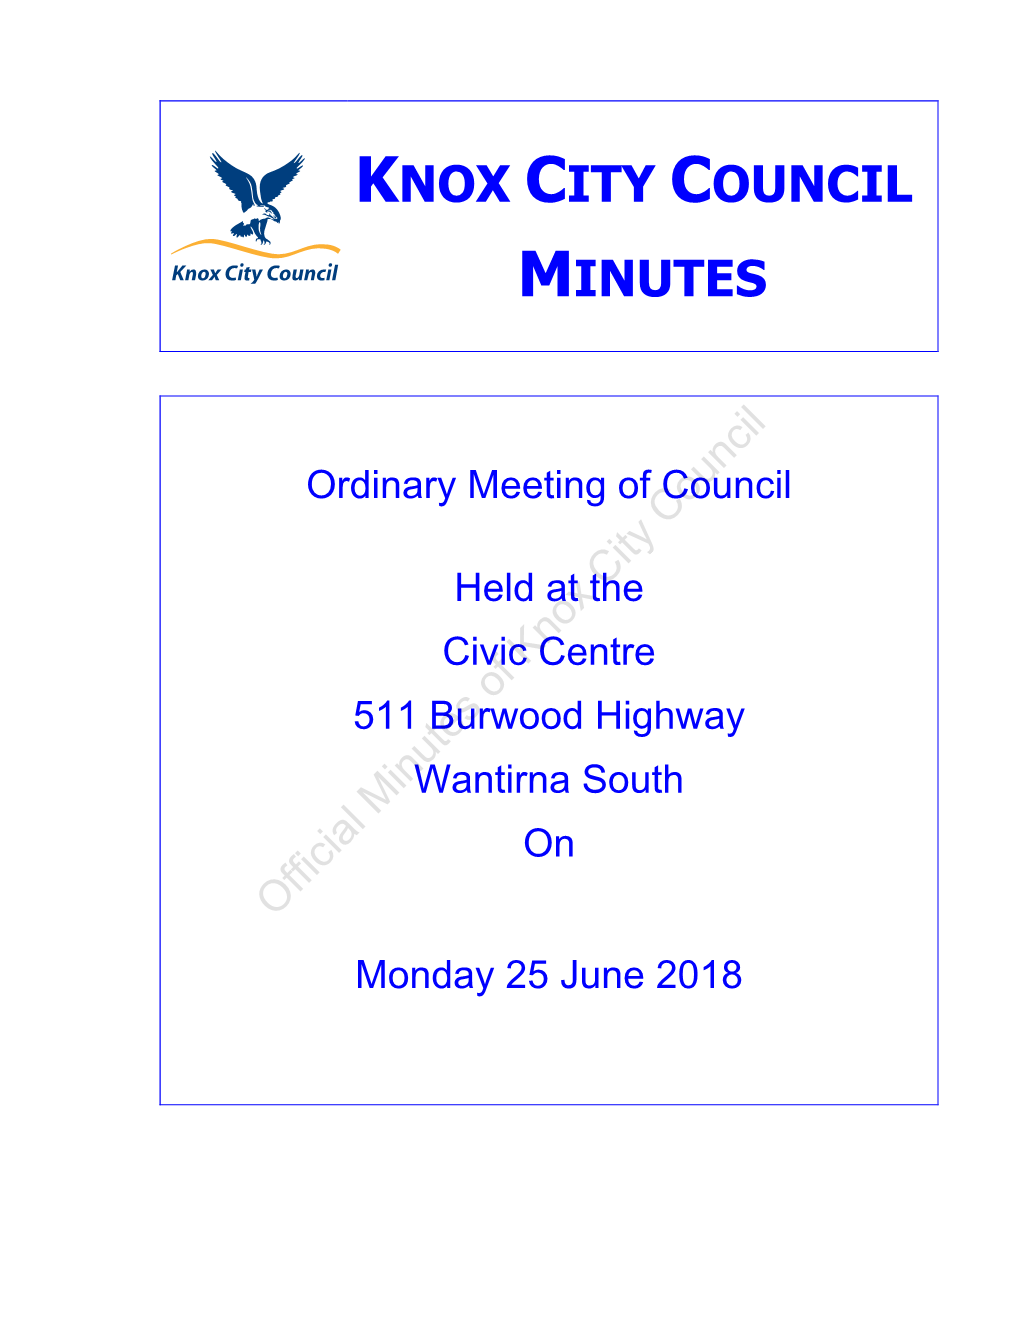 Knox City Council Minutes